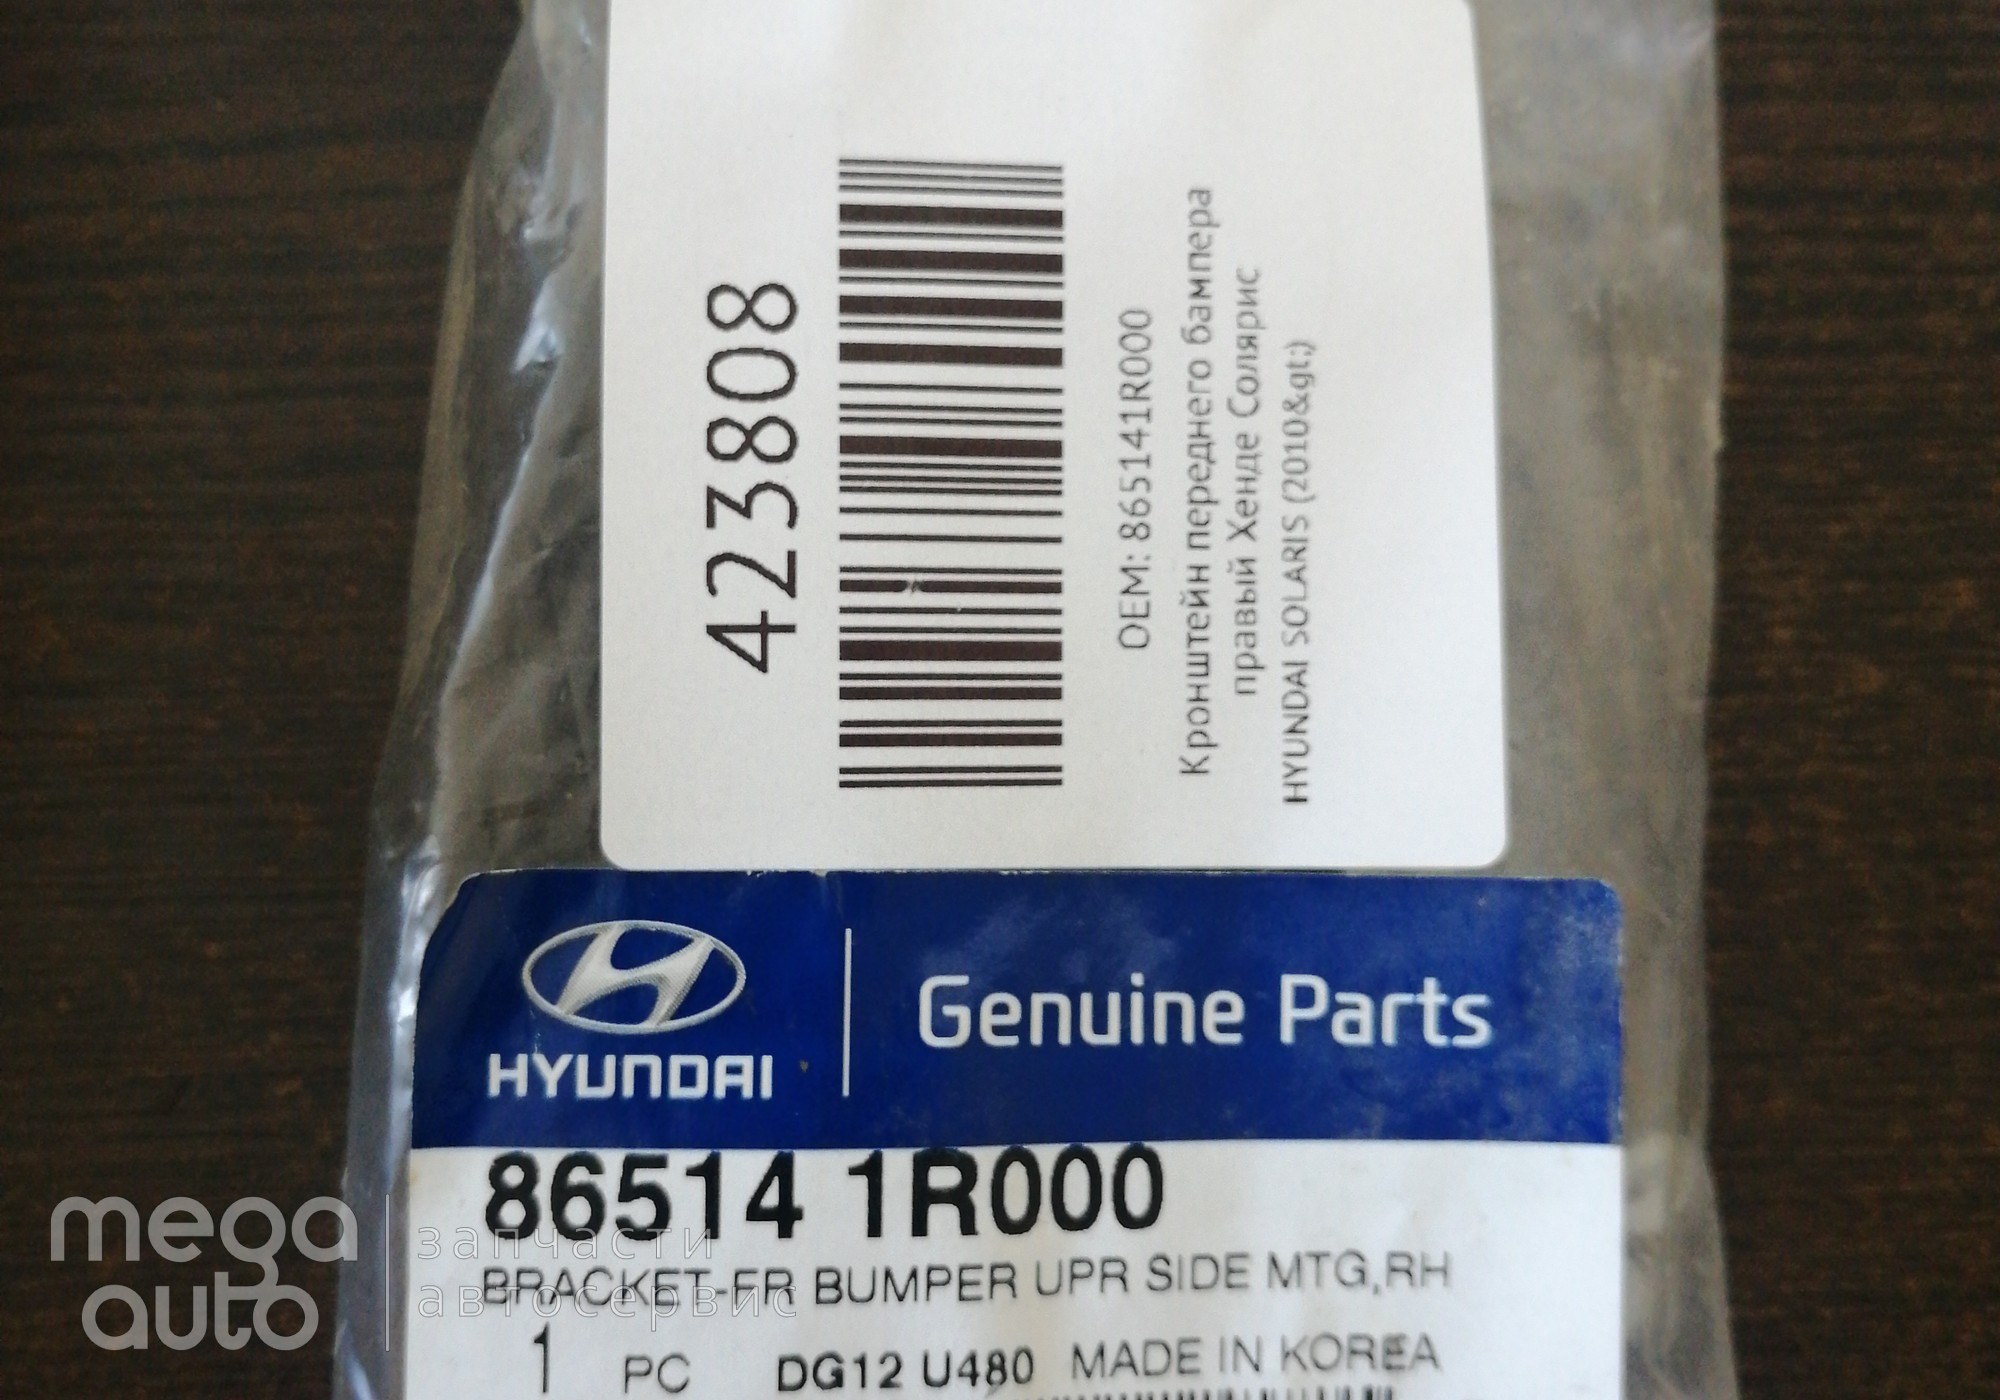 865141R000 Кронштейн переднего бампера правый Хенде Солярис для Hyundai Solaris II (с 2017)